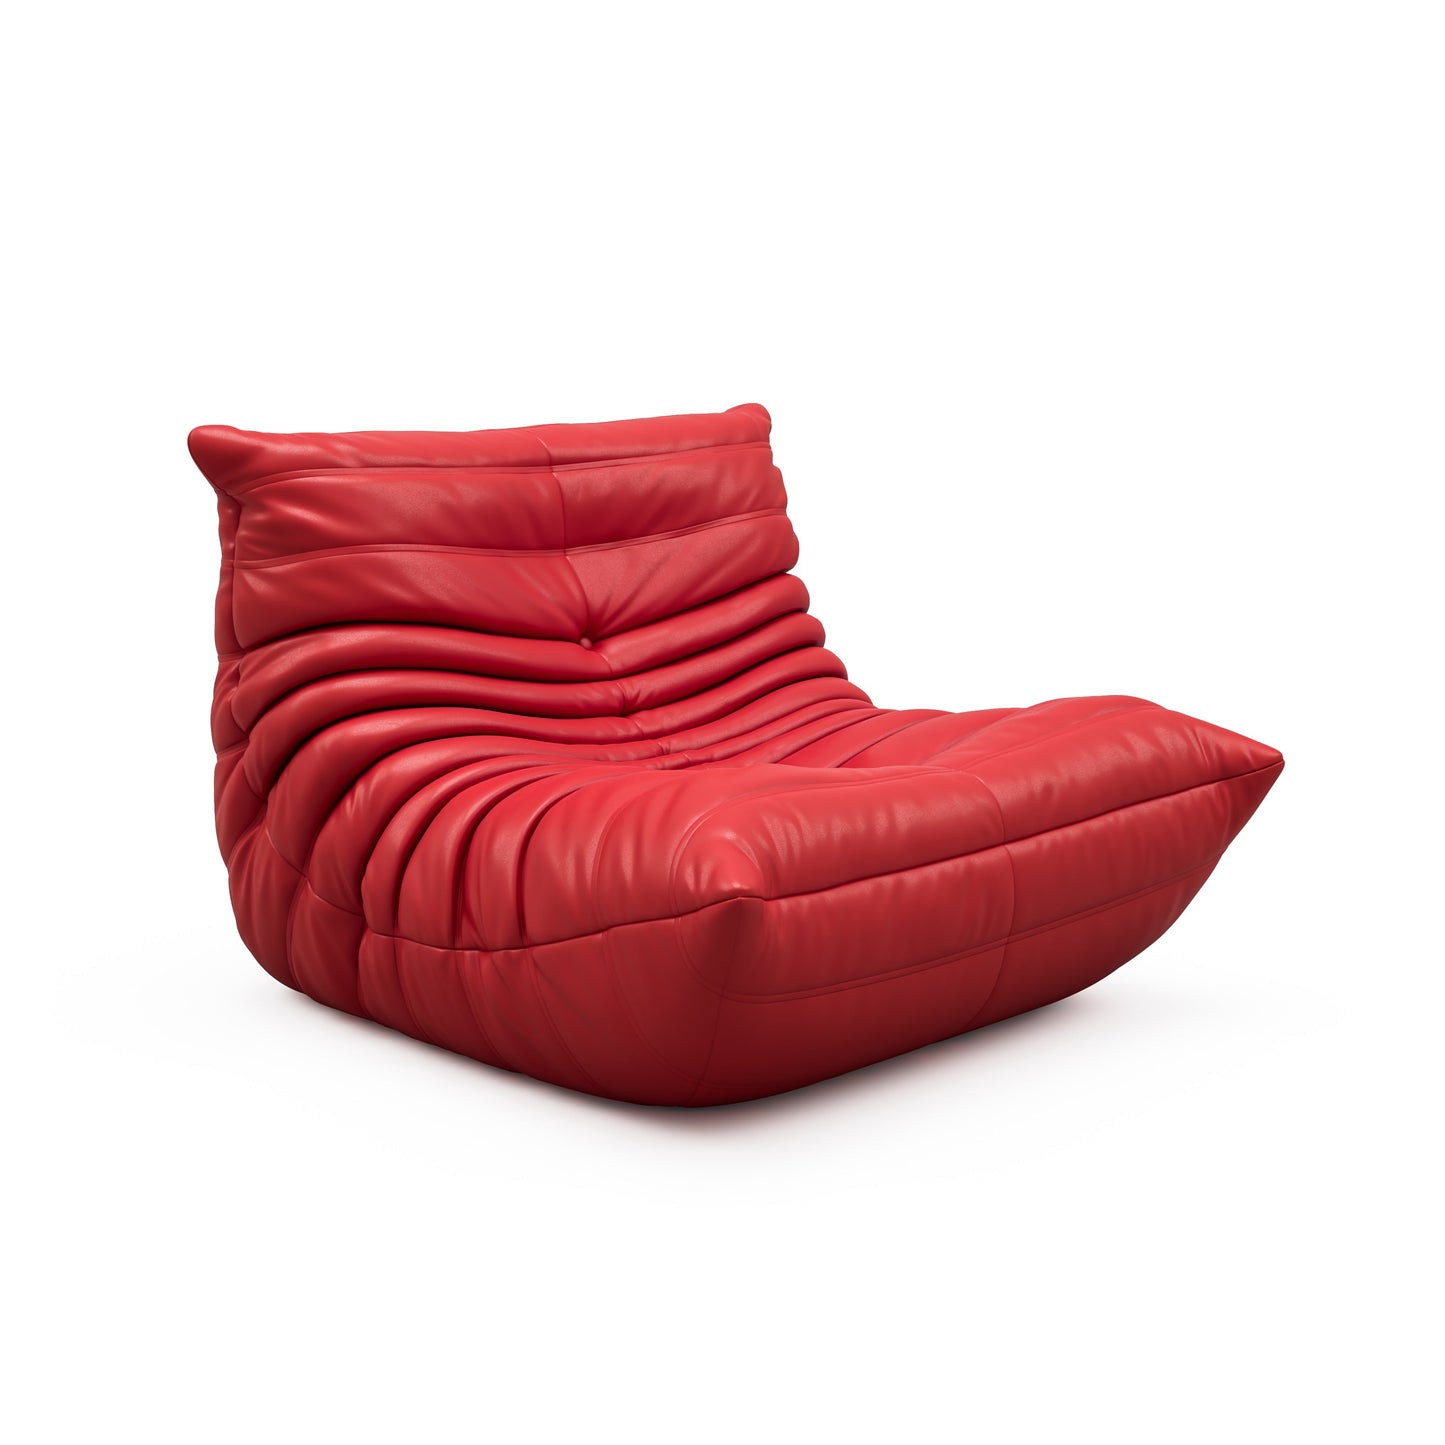 Arthia Designs - Ligne Roset Fireside Sofa Togo by Michel Ducaroy - Review